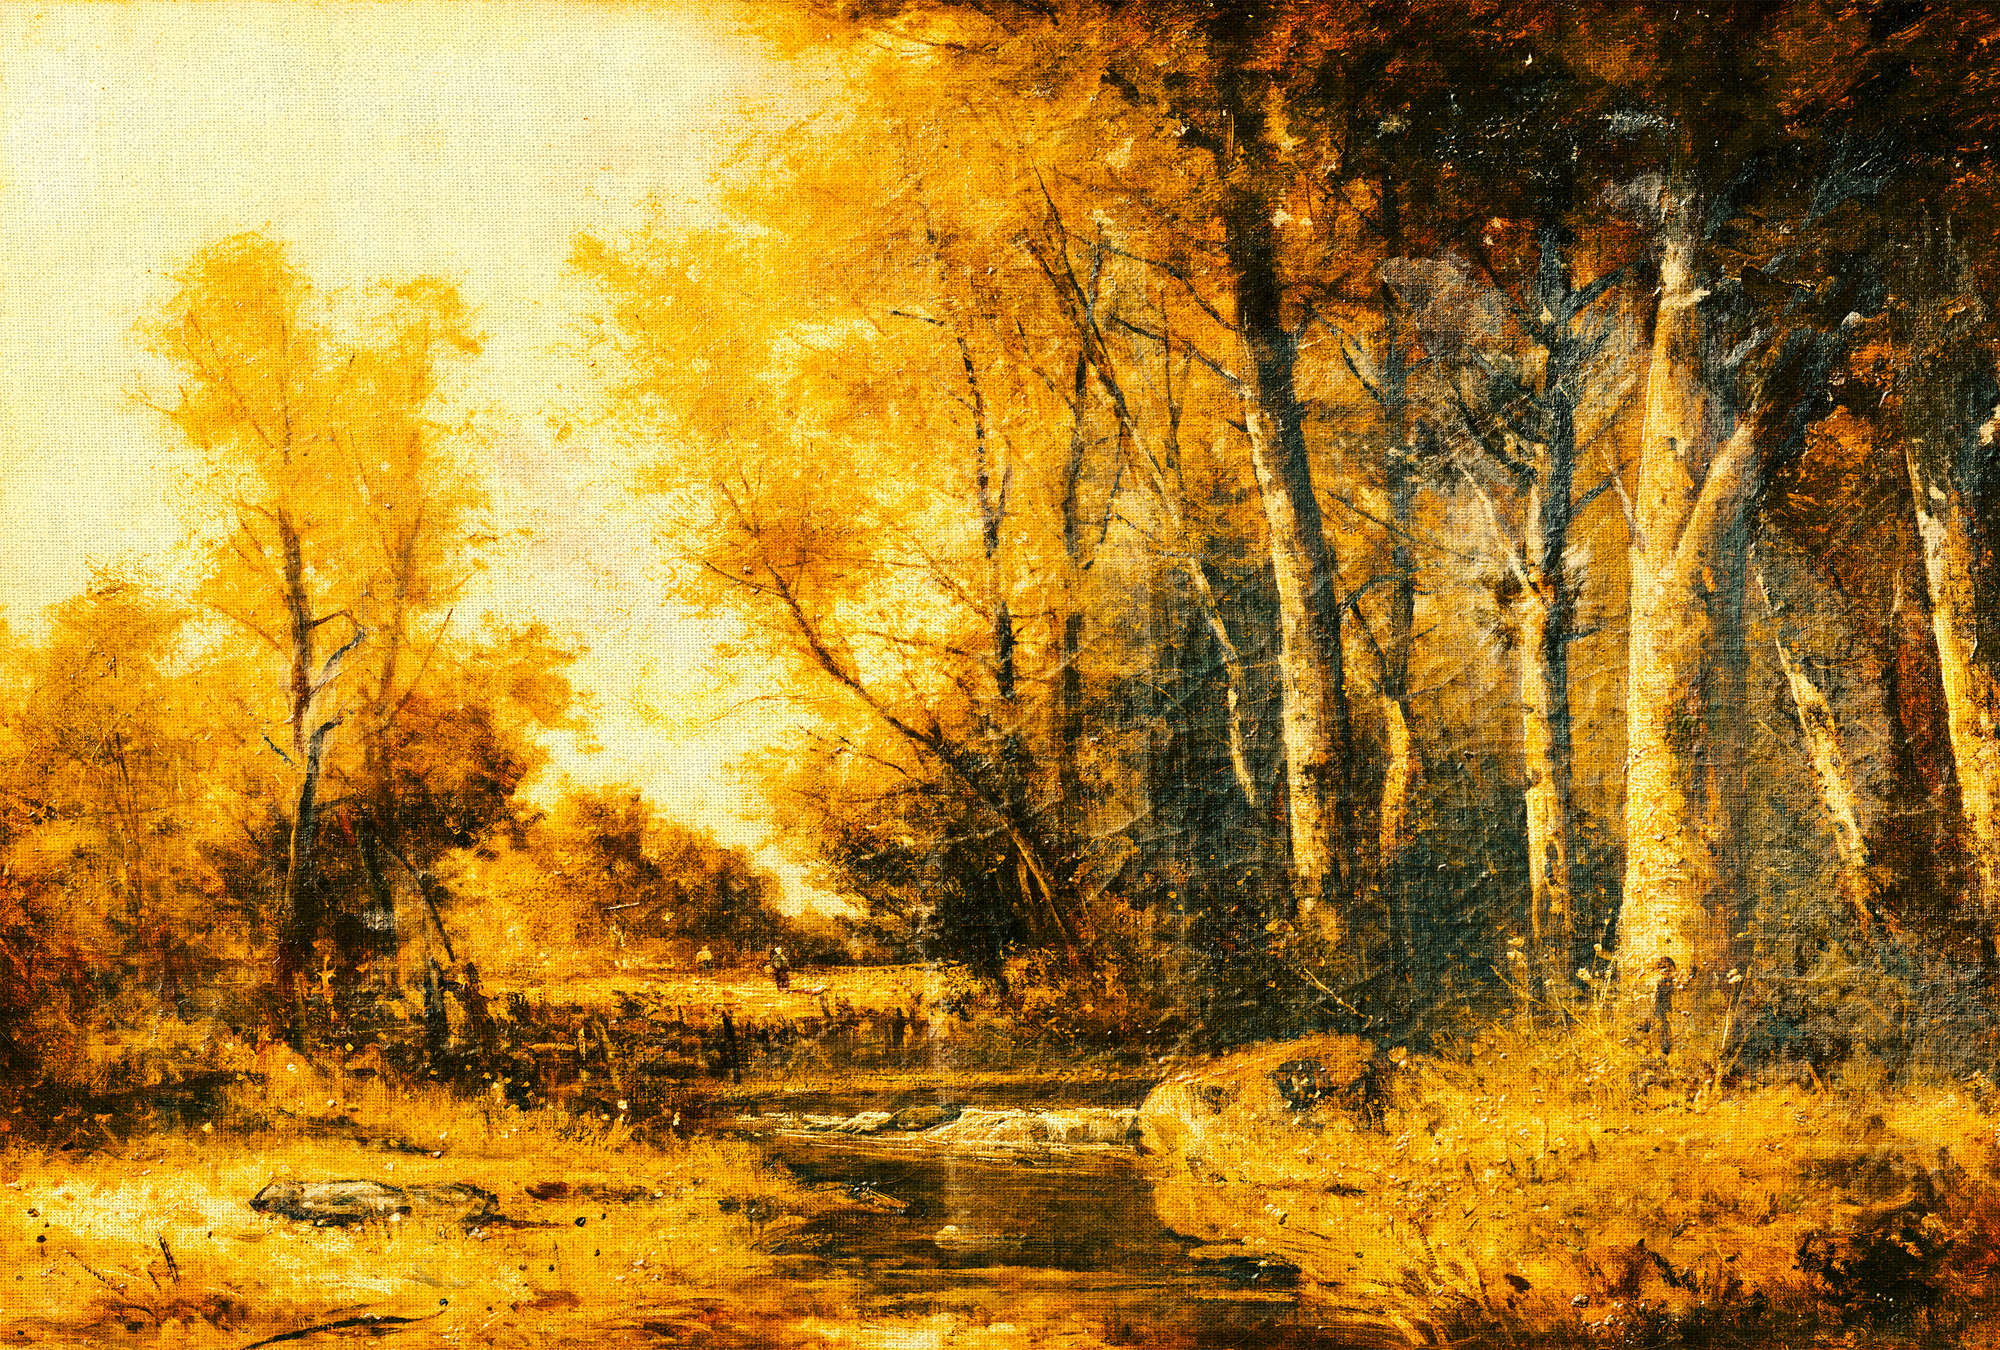             Fototapete Landschaft, Wald & Fluss im Kunststil – Gelb, Orange, Schwarz
        